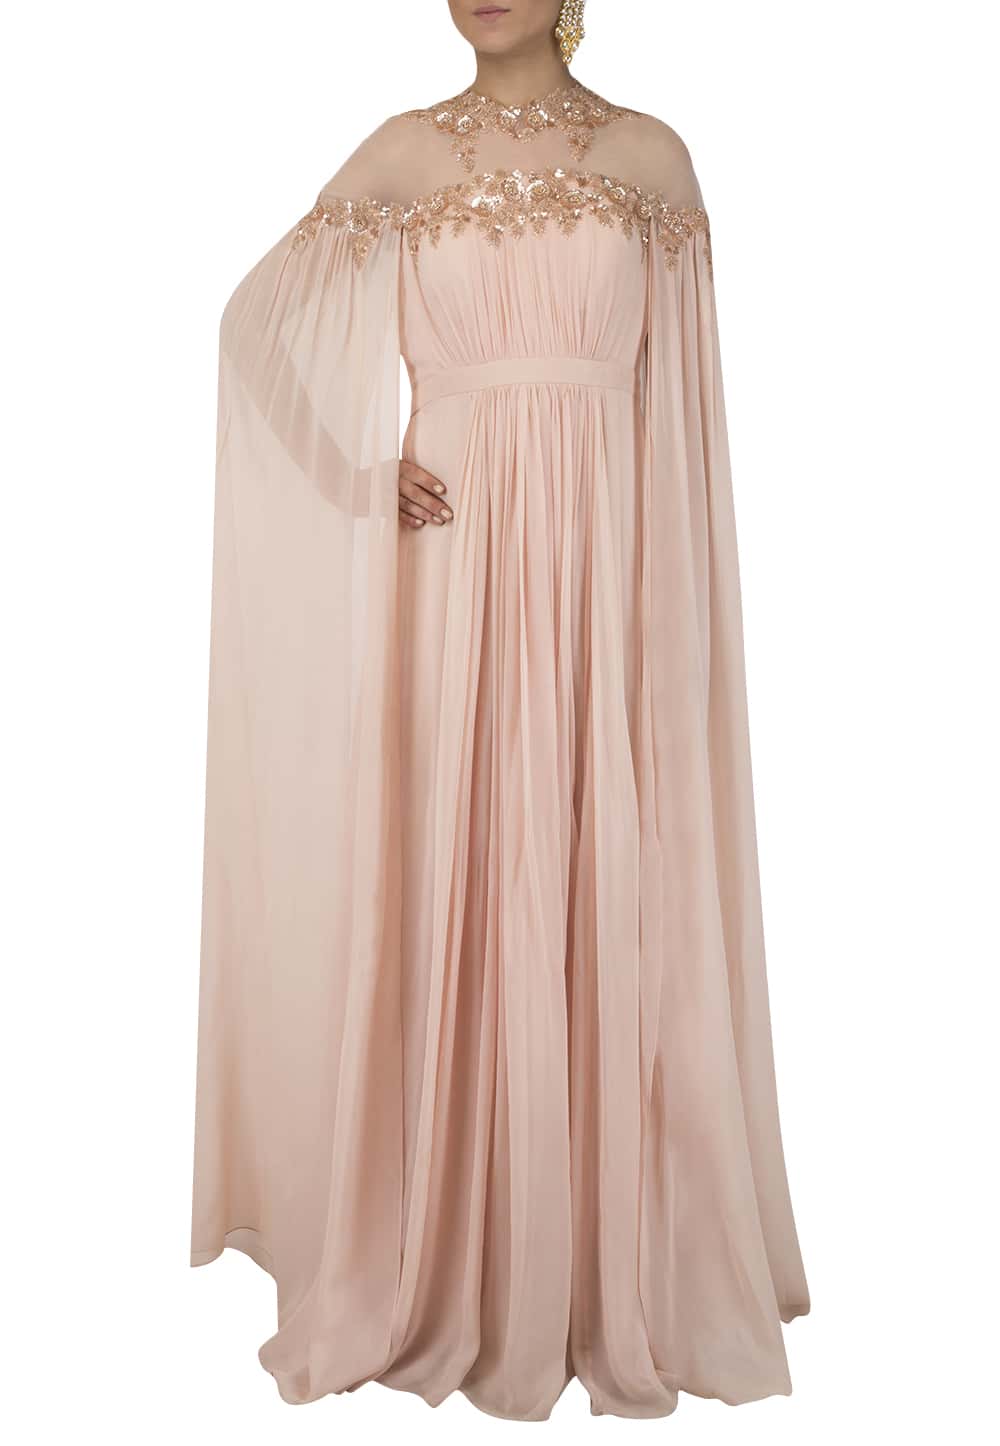 Curvy Fairy Blush Pink Wrap Lace Wedding Dress #1293